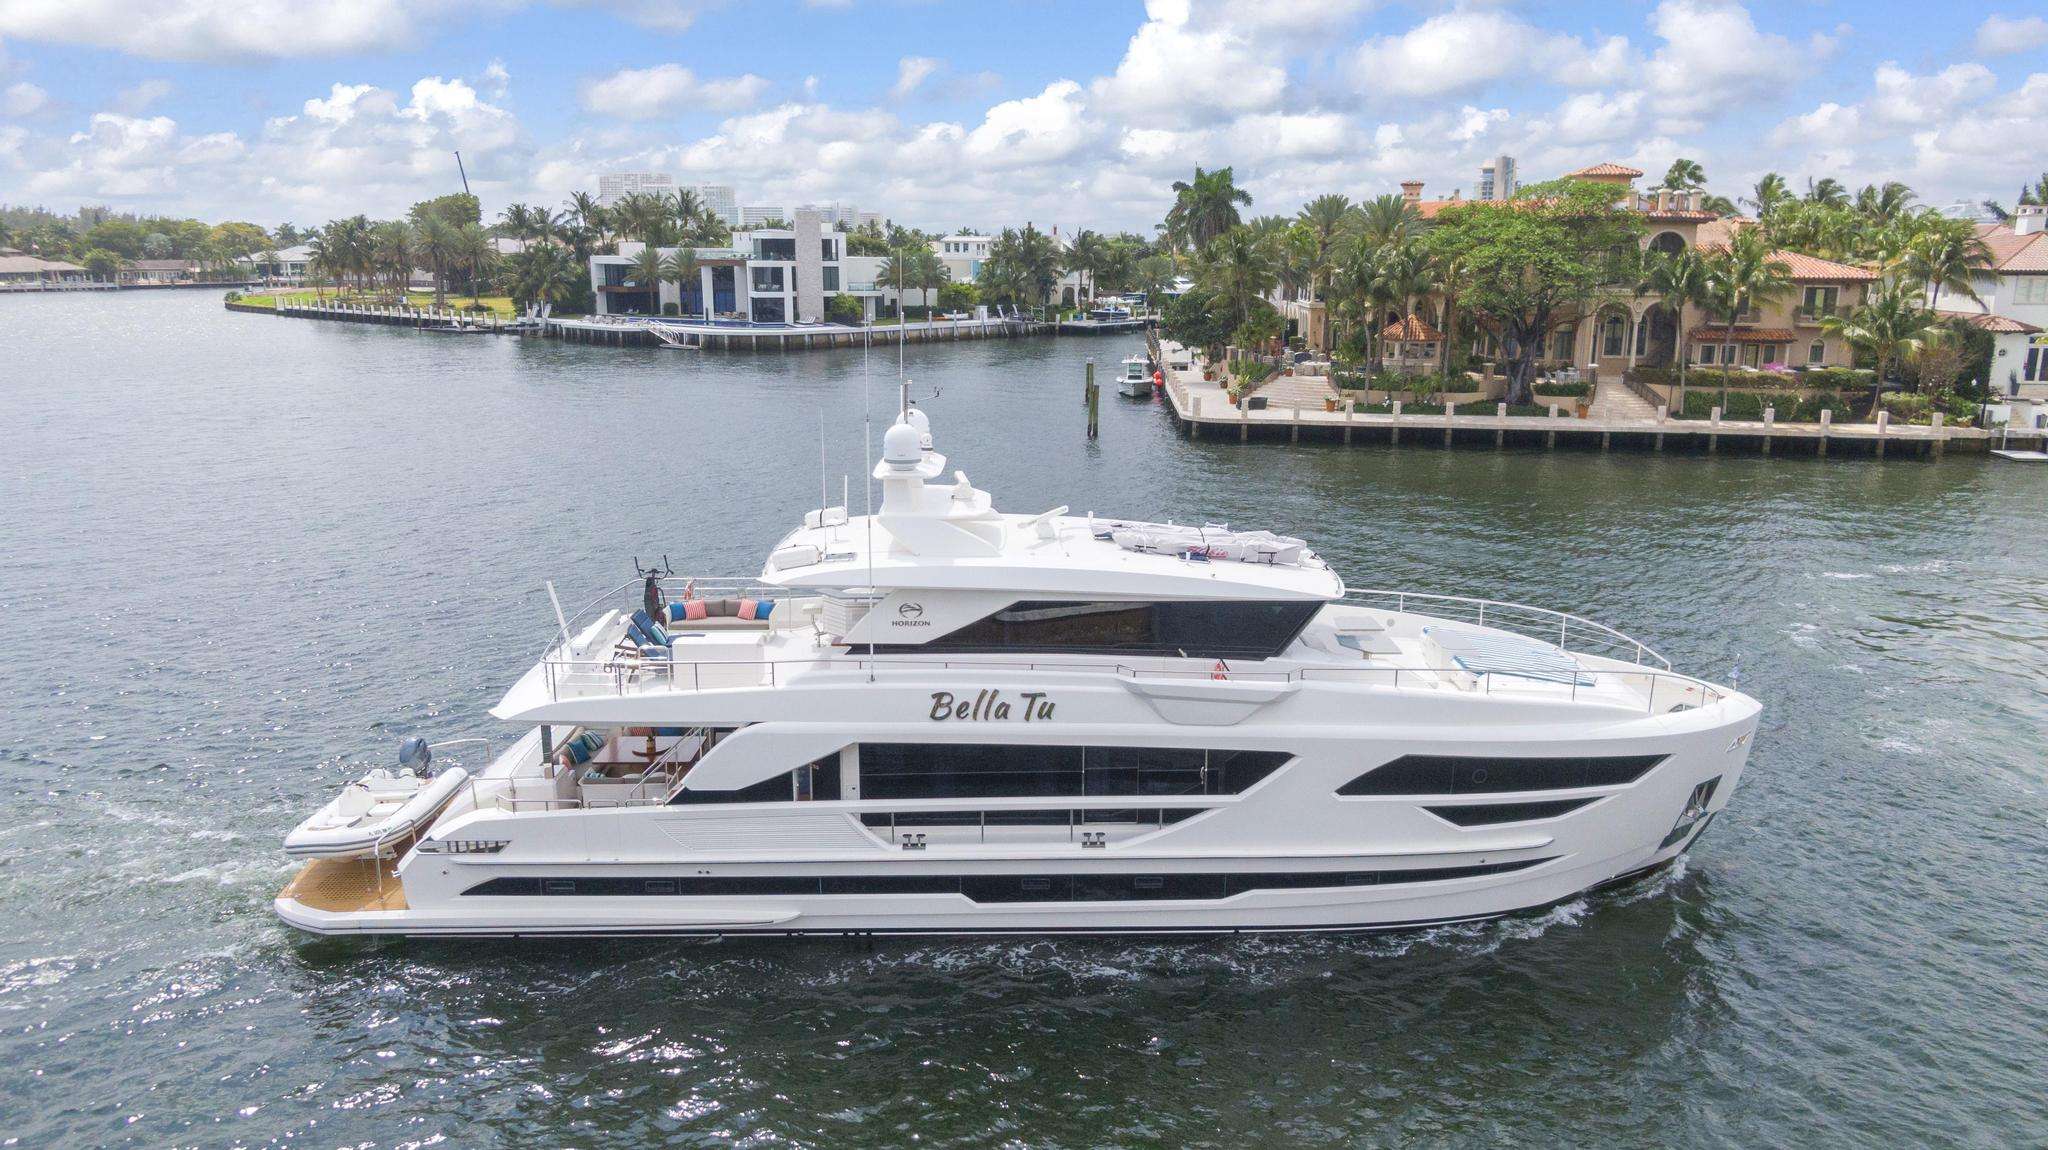 BELLA TU - Yacht Charter Newport & Boat hire in US East Coast & Bahamas 1